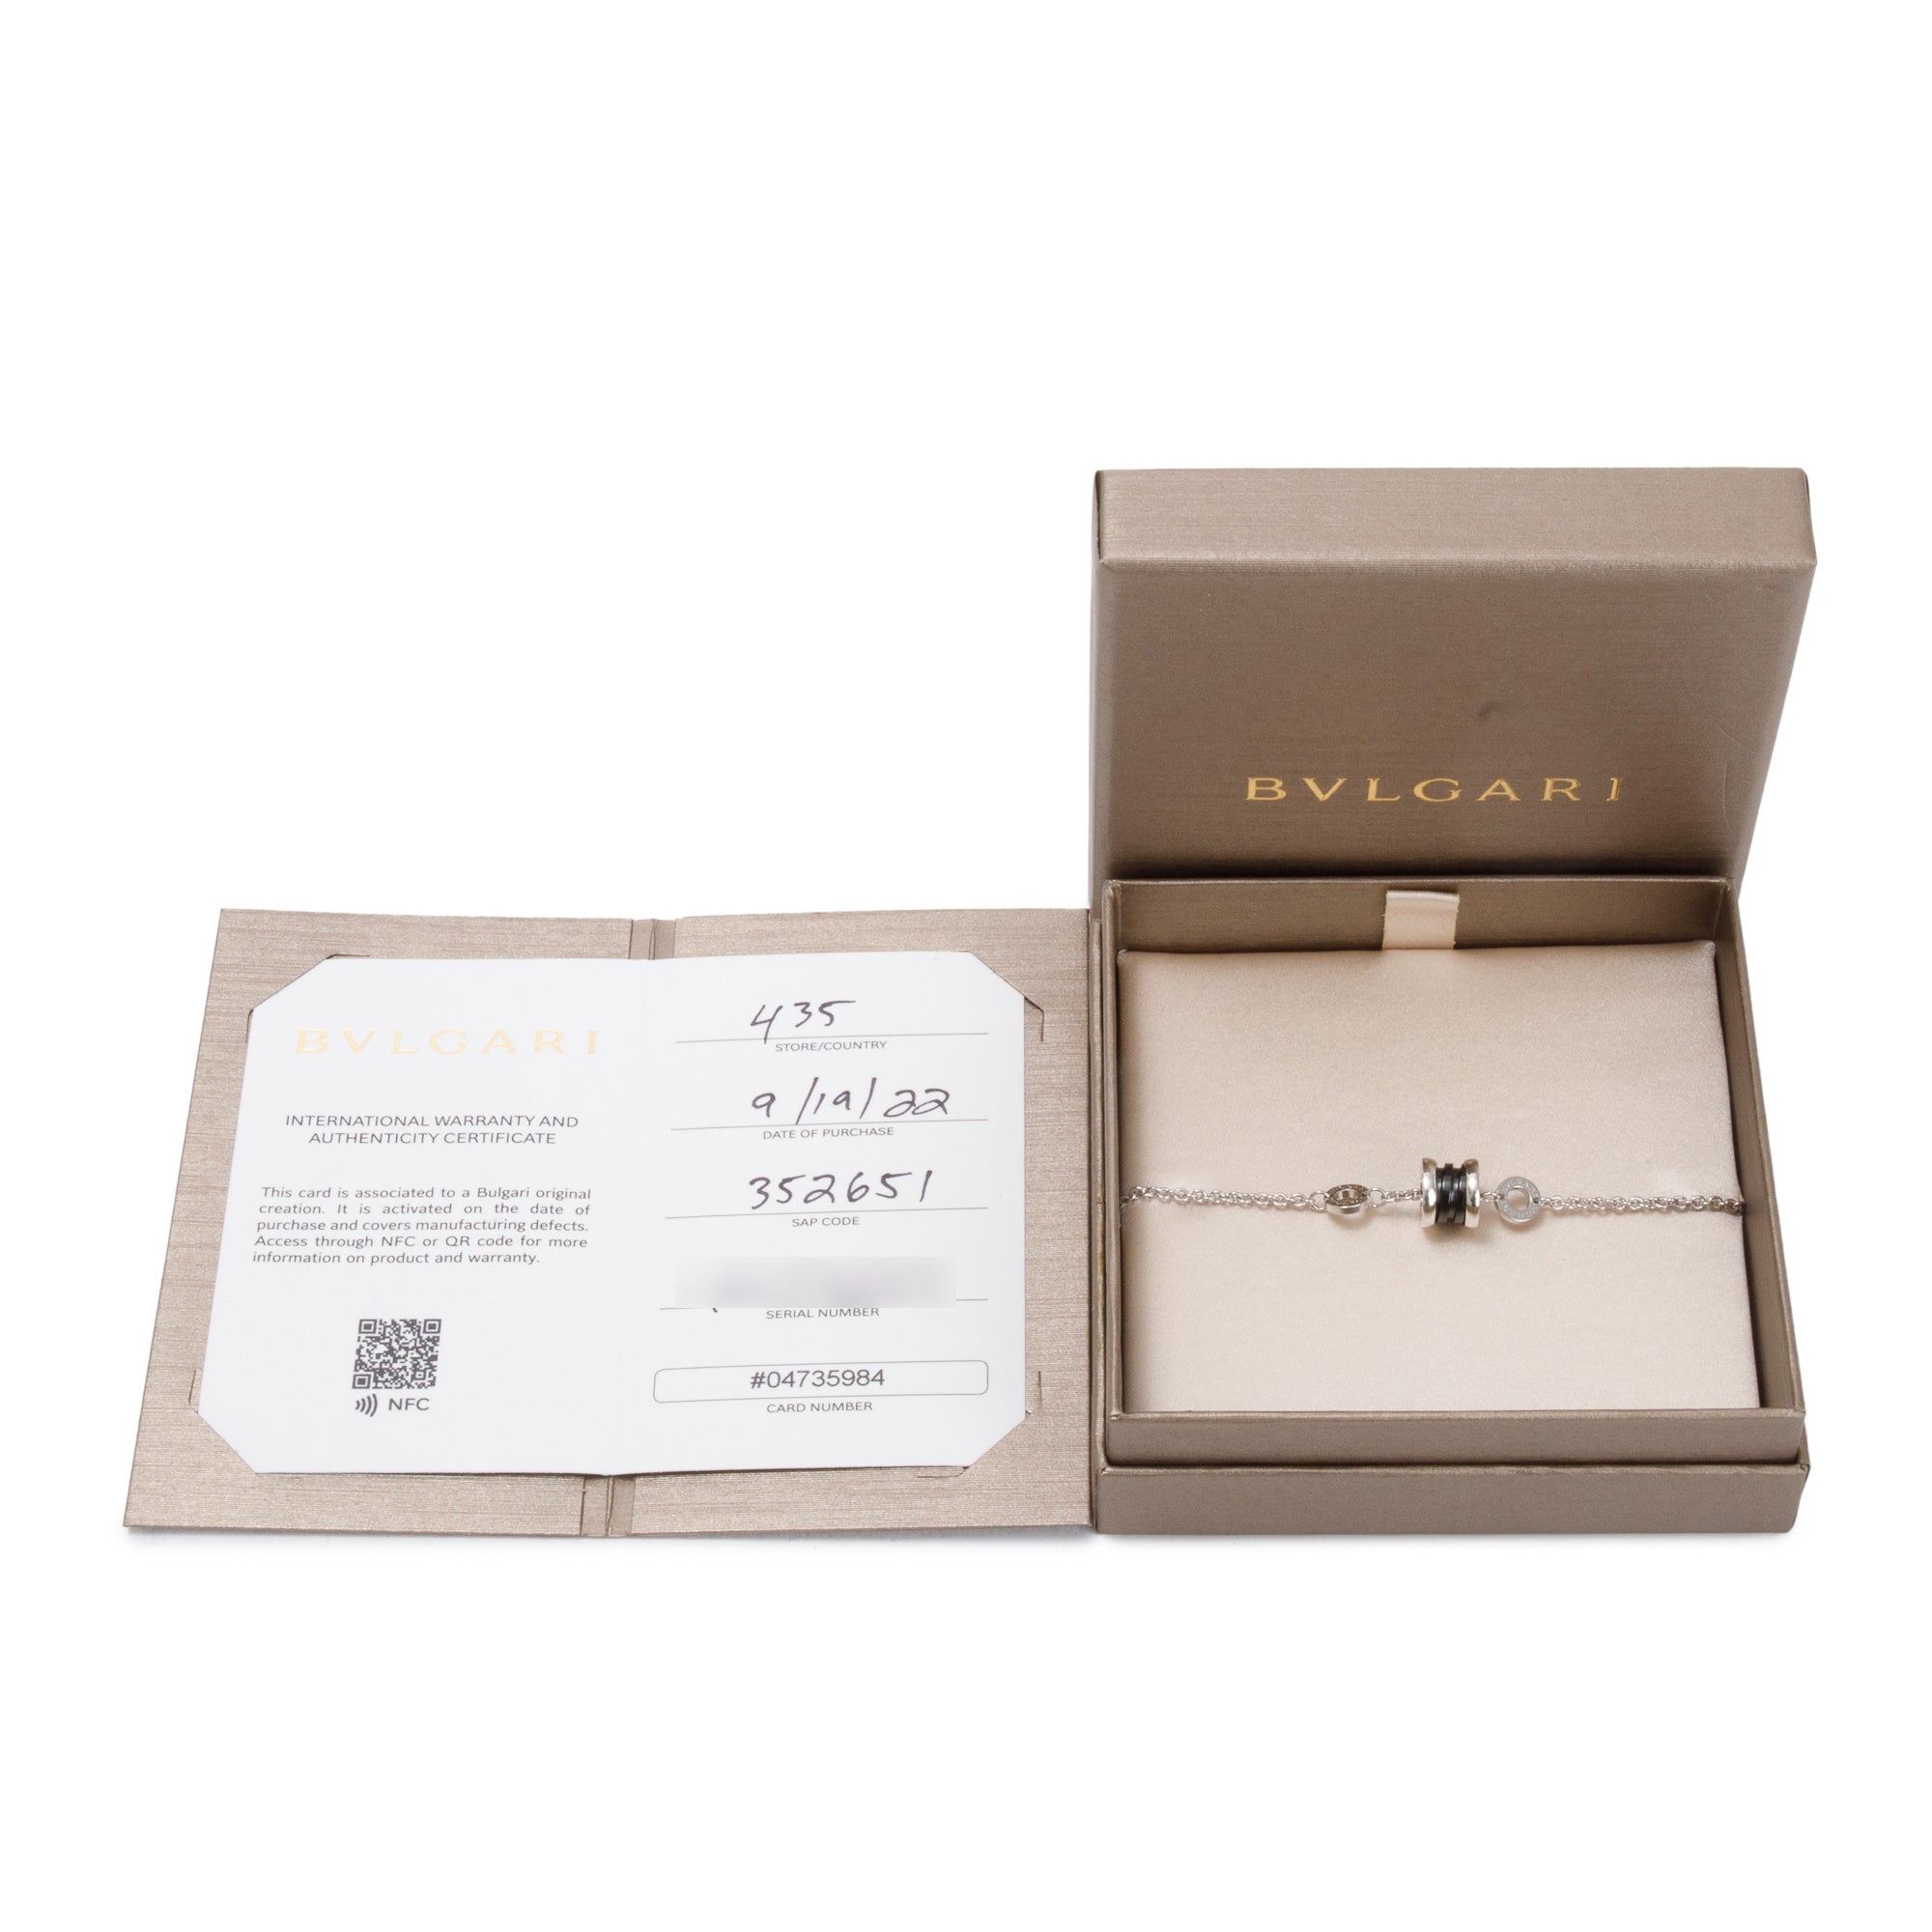 Bvlgari Bvlgari Bracelet,Rose Gold with Diamonds,Authentic,made In Italy |  eBay